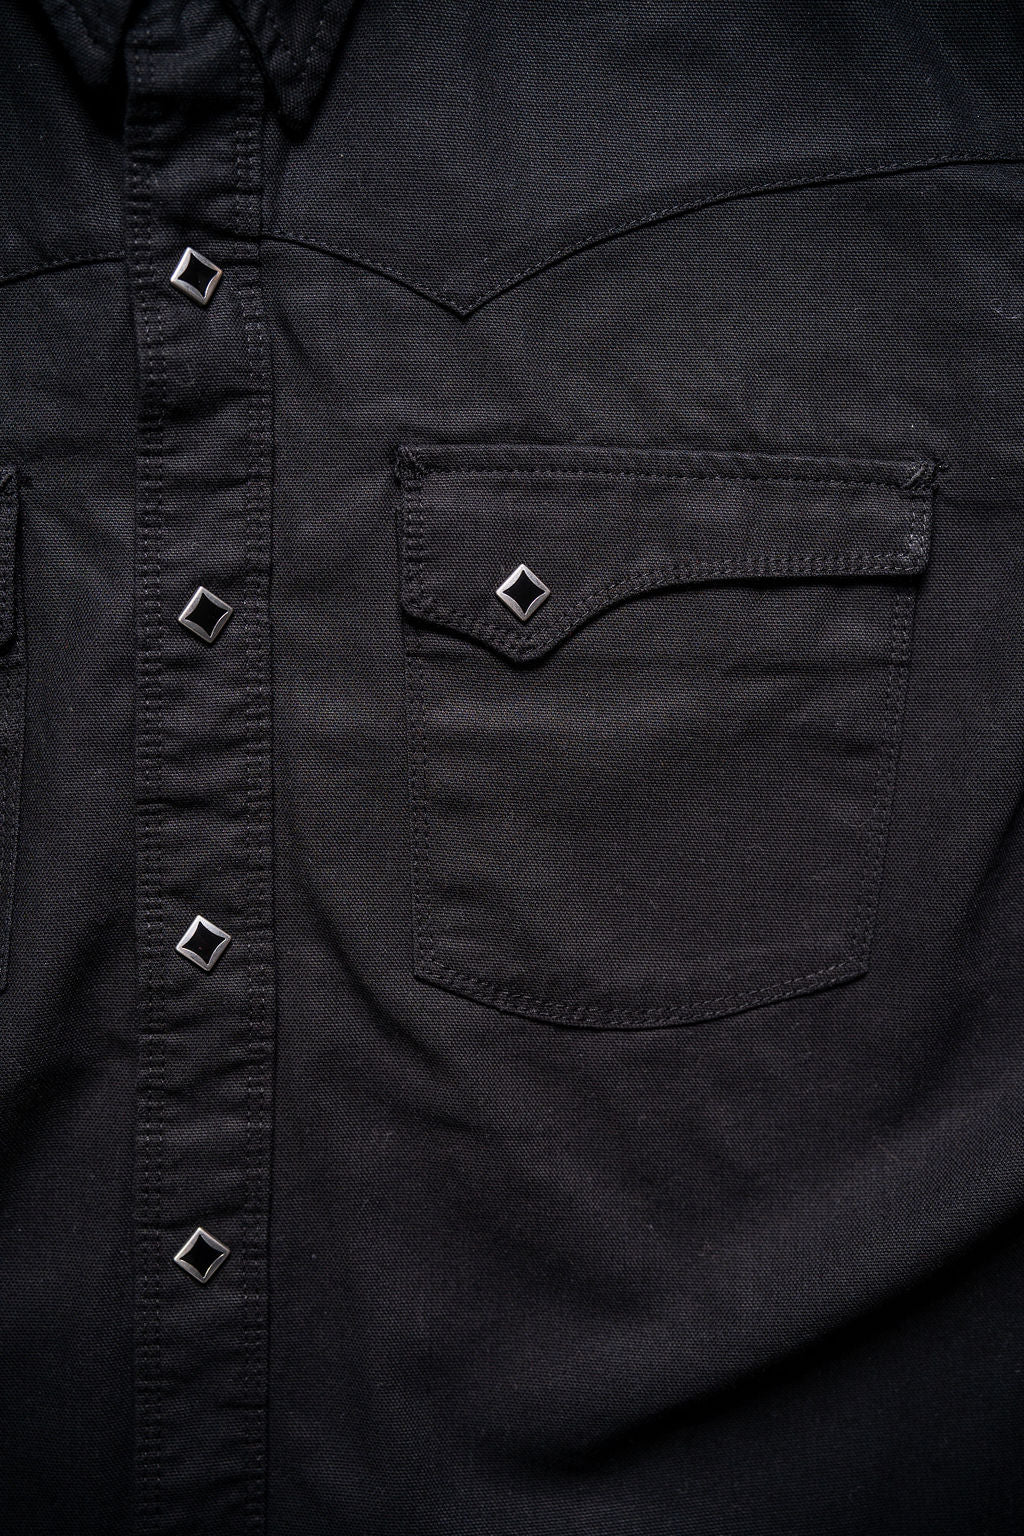 Freenote Cloth Calico S/S - 9oz Black Denim